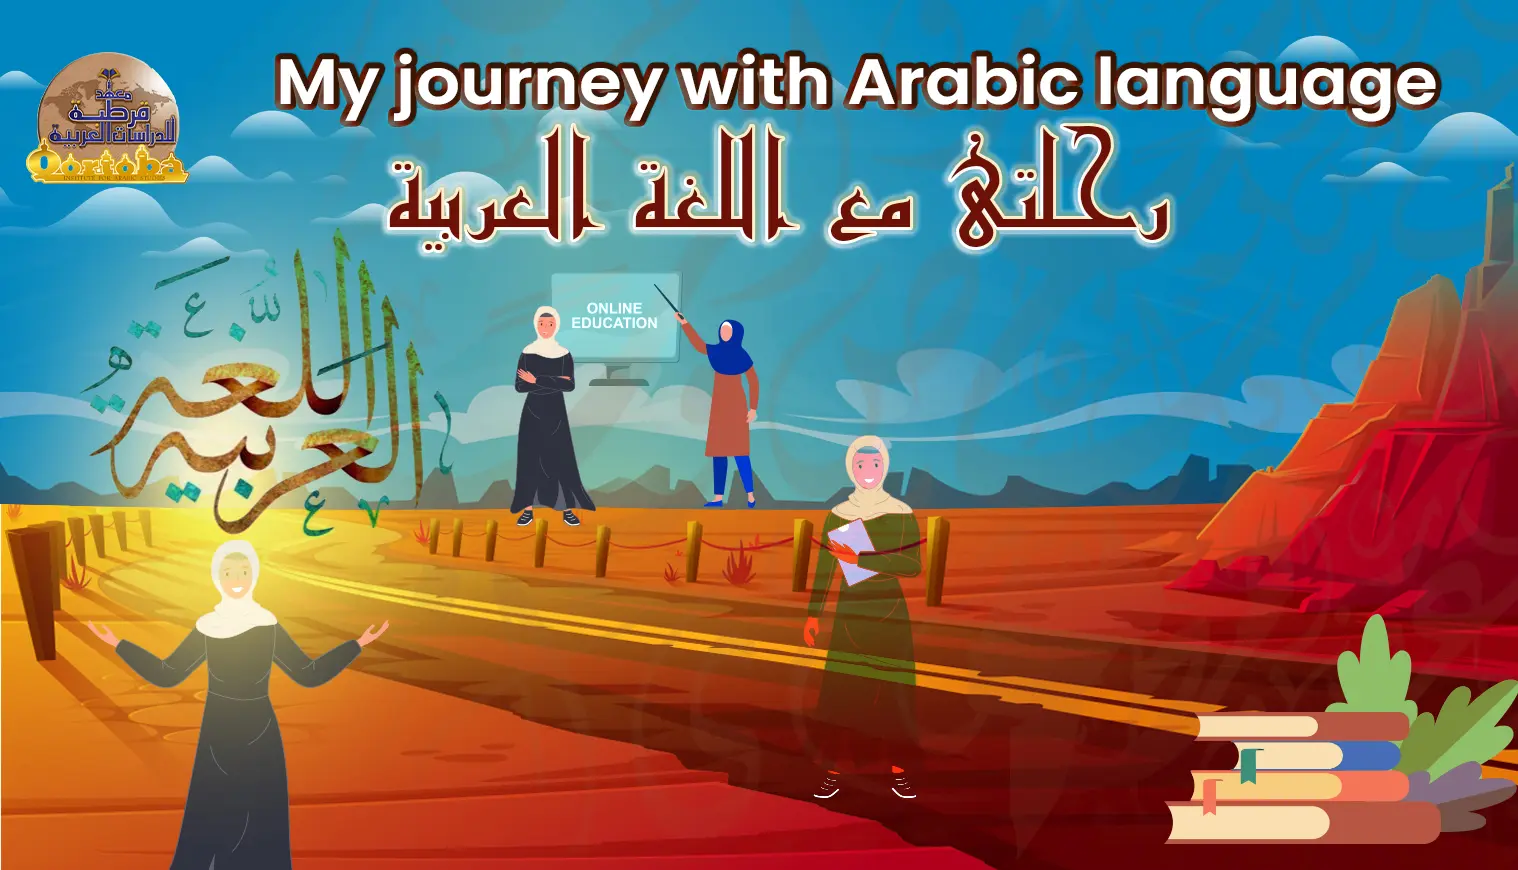 My journey with Arabic language by Saima Bhatty (UK) 1